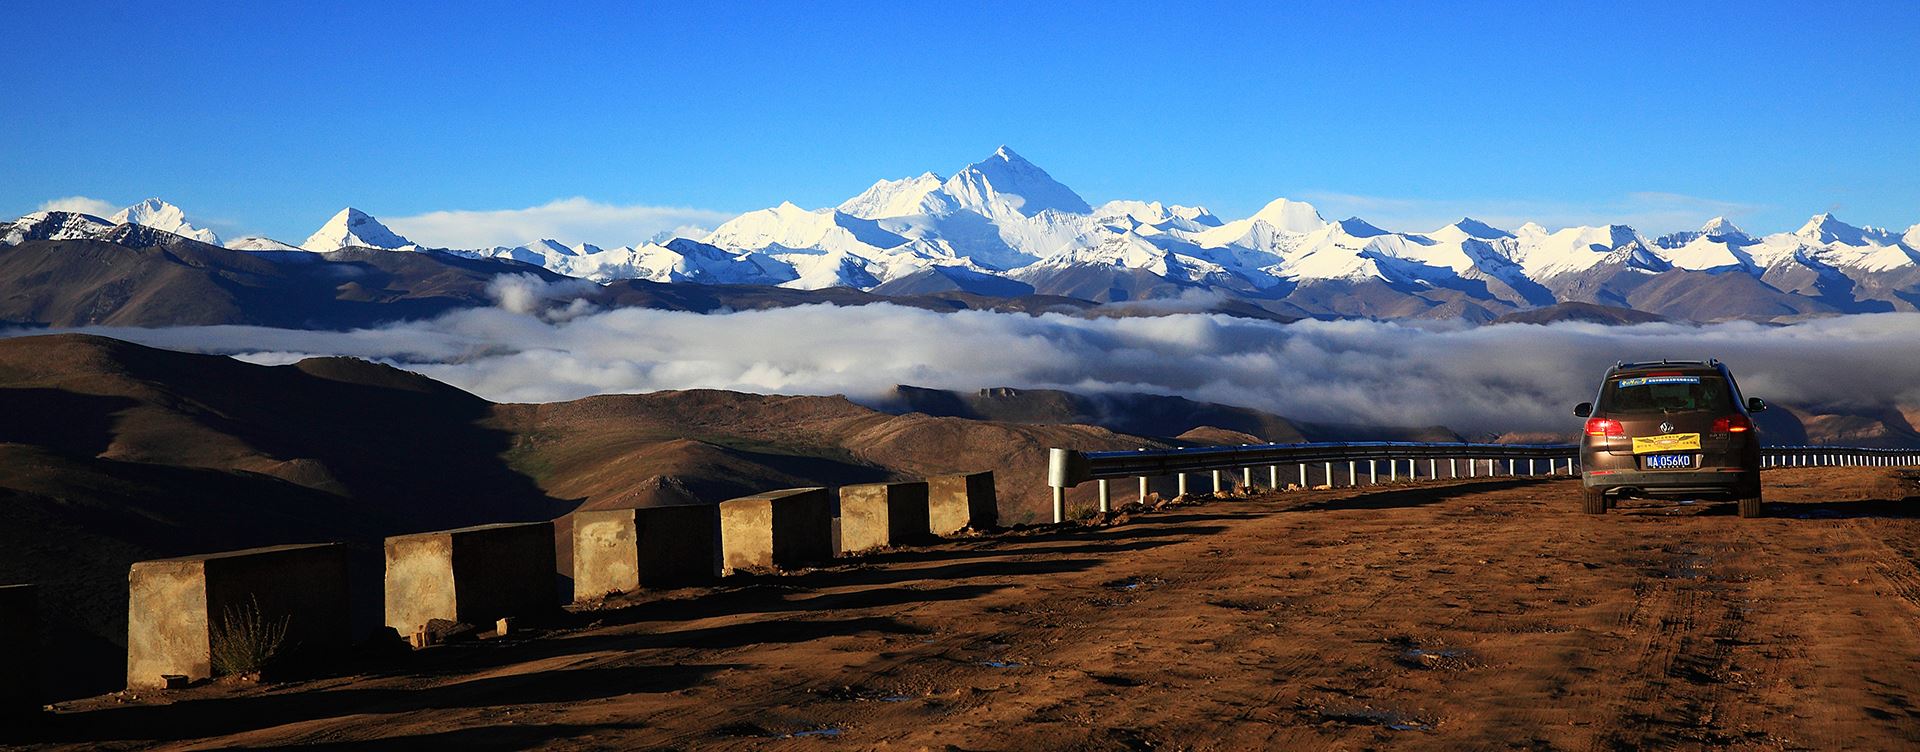 Viaggio Terrestre dal Tibet allo Xinjiang con Everest e Escursionismo intorno a Kailash